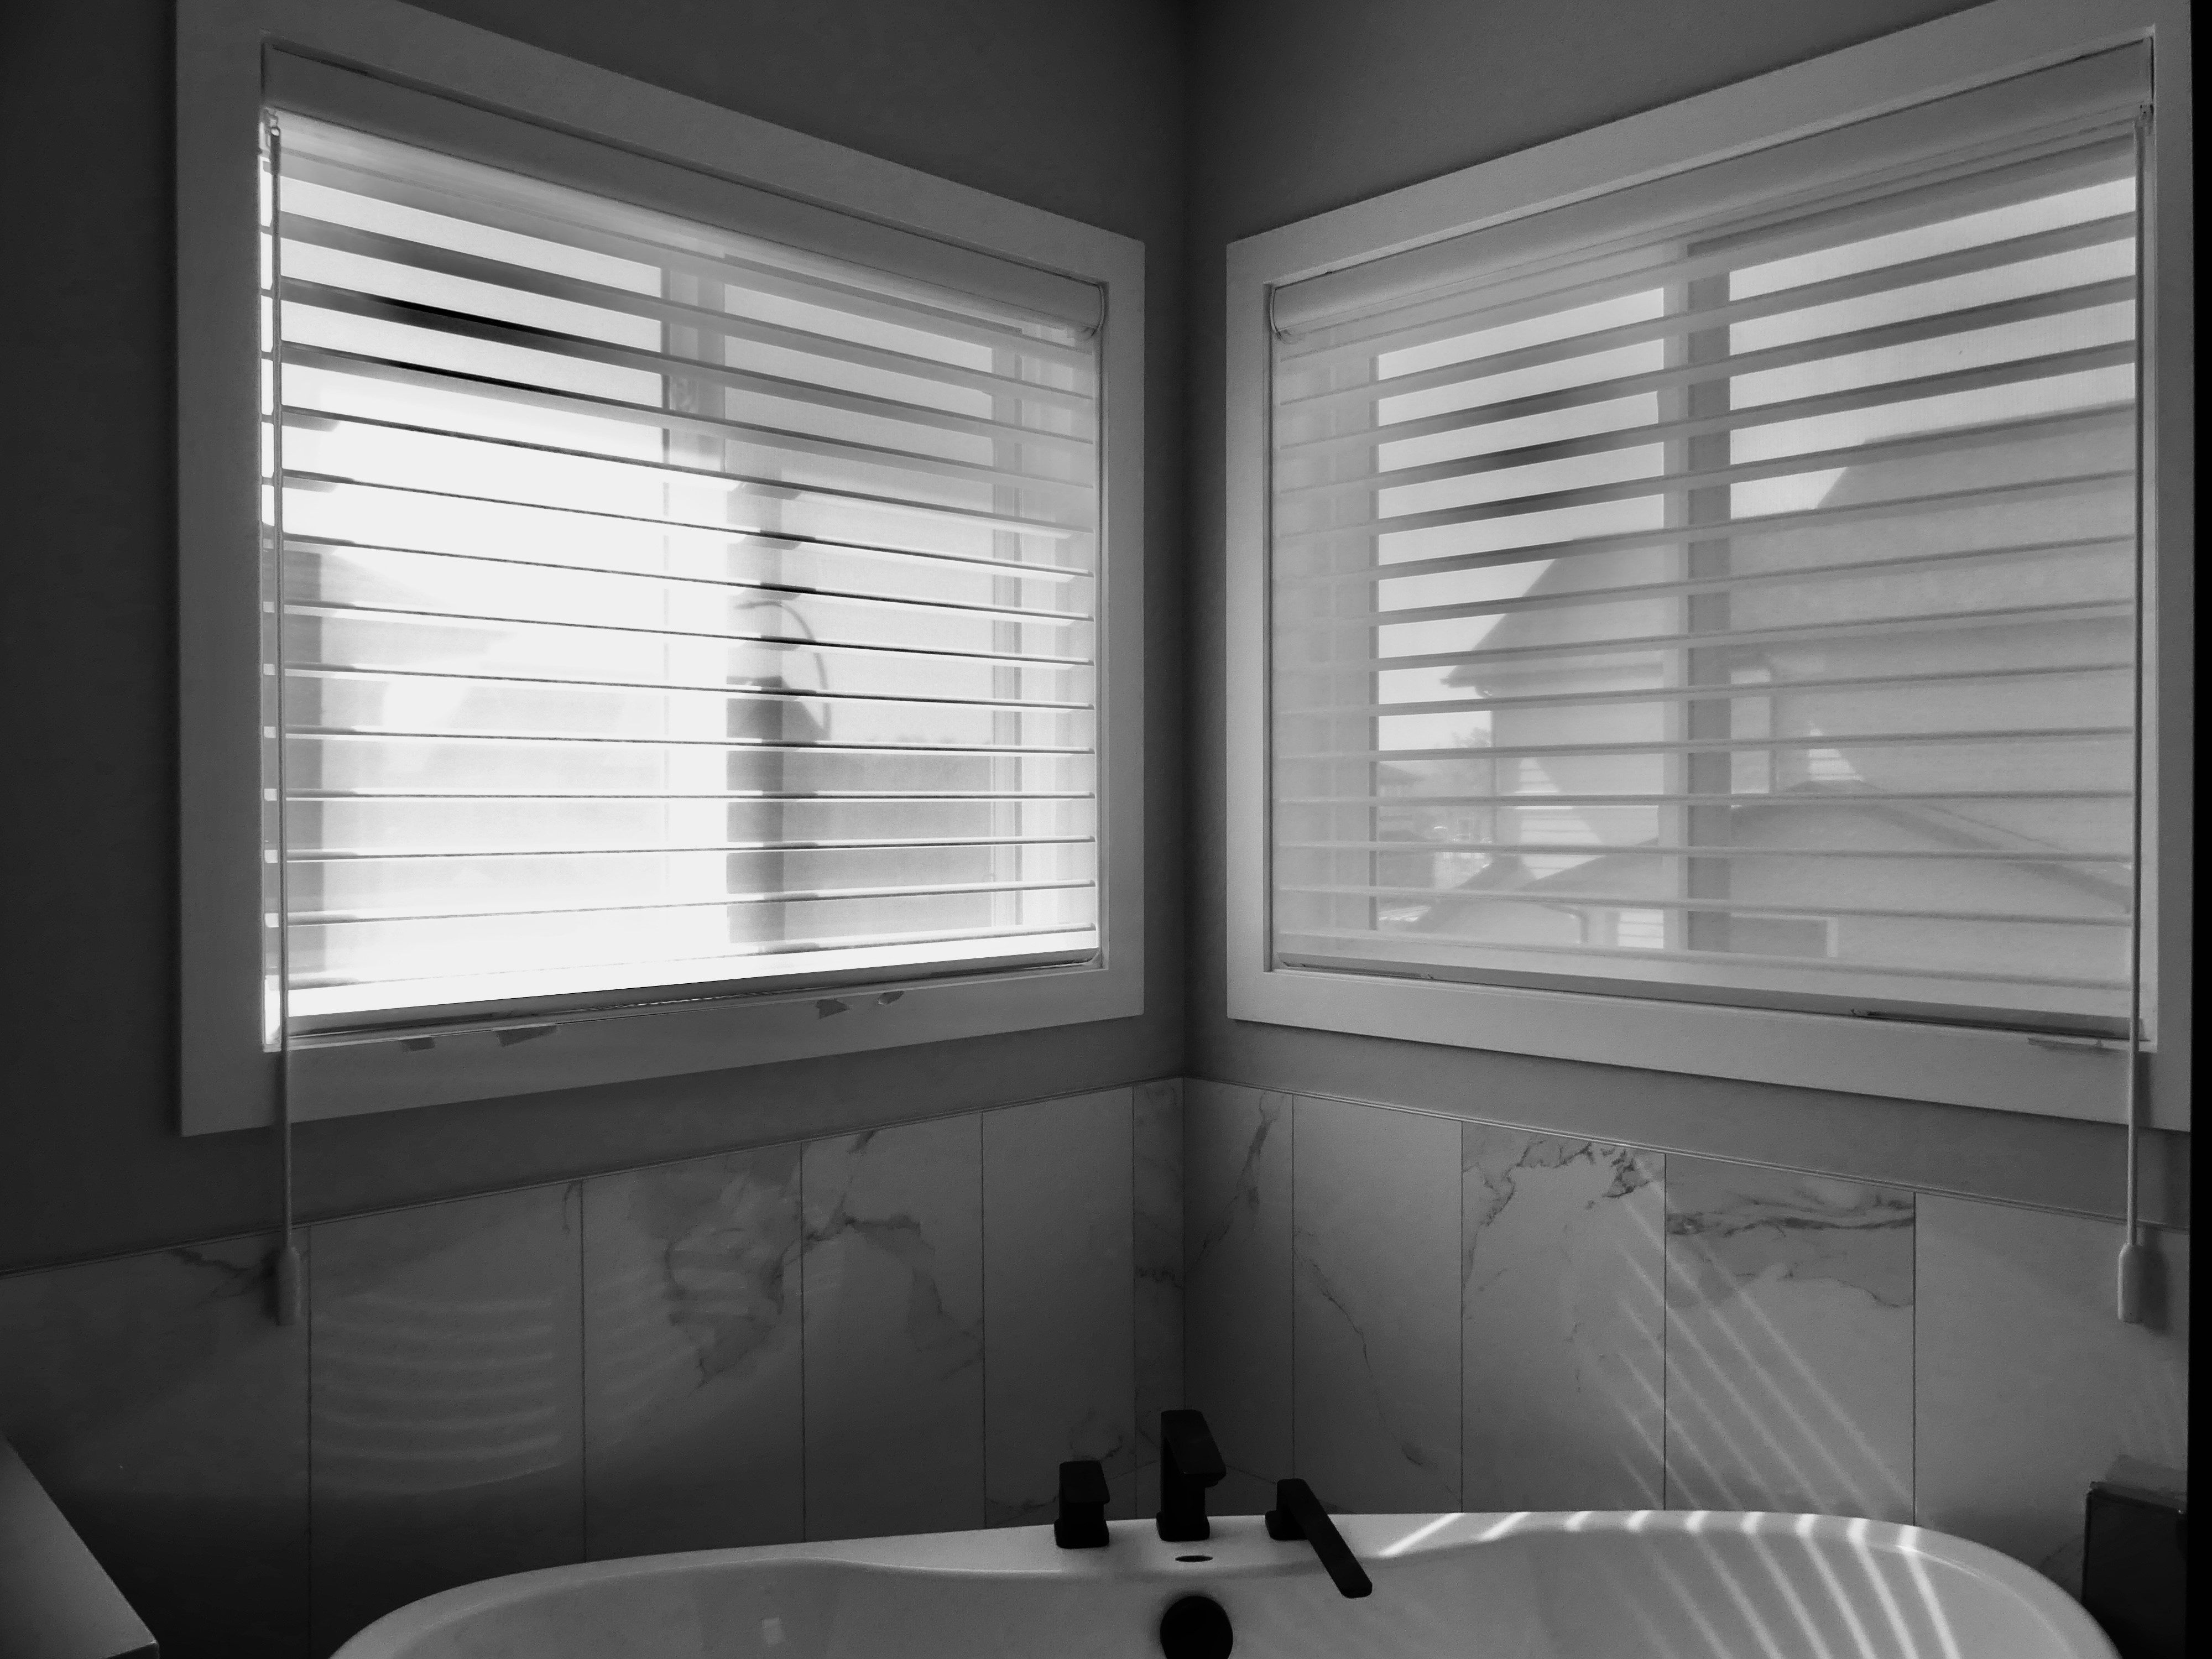 Stunning Bathroom Window Coverings Budget Blinds of South East Calgary Calgary (403)251-5515